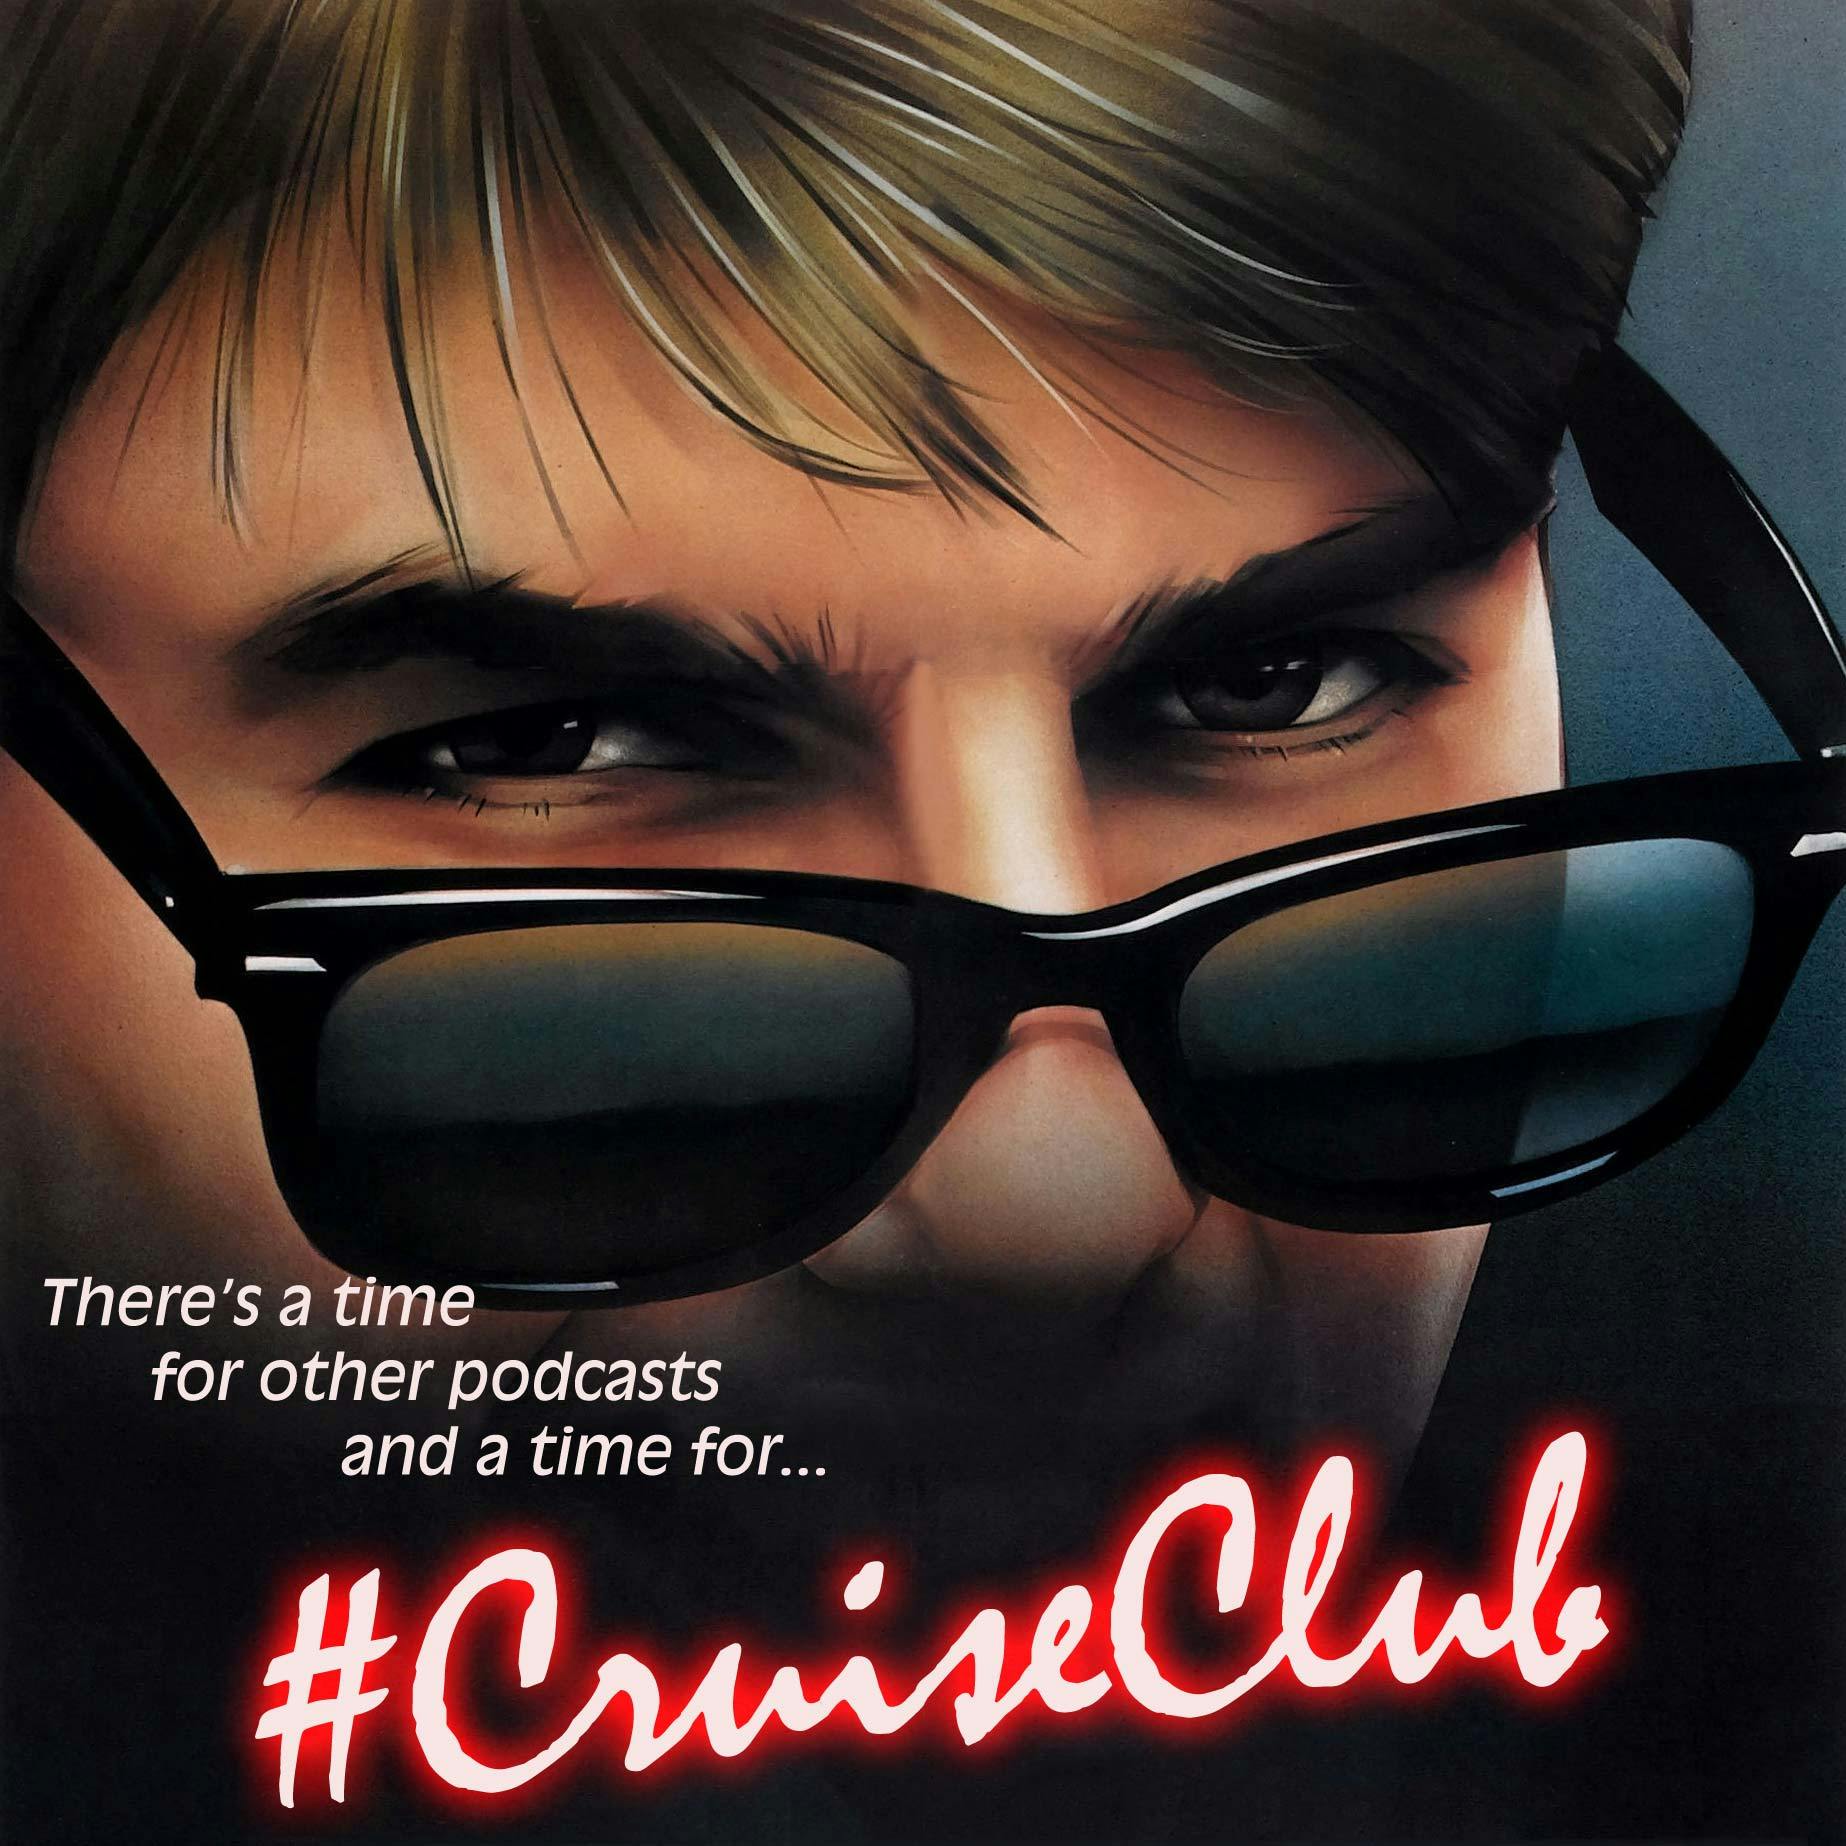 Introducing #CruiseClub!